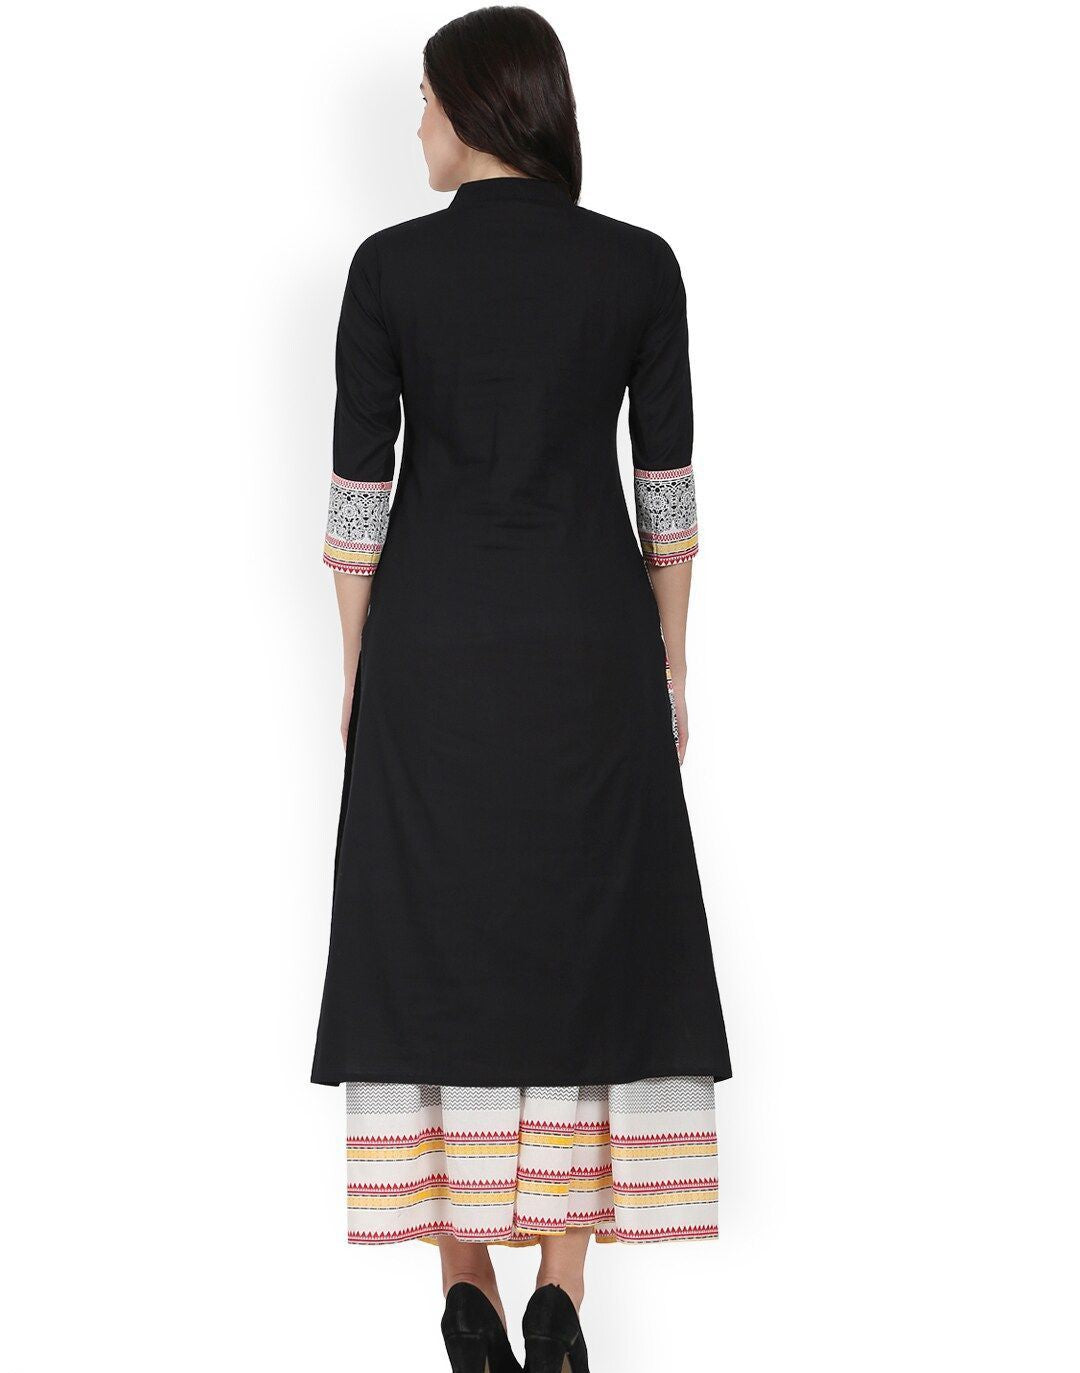 Black & Off-White Printed Kurta with Skirt